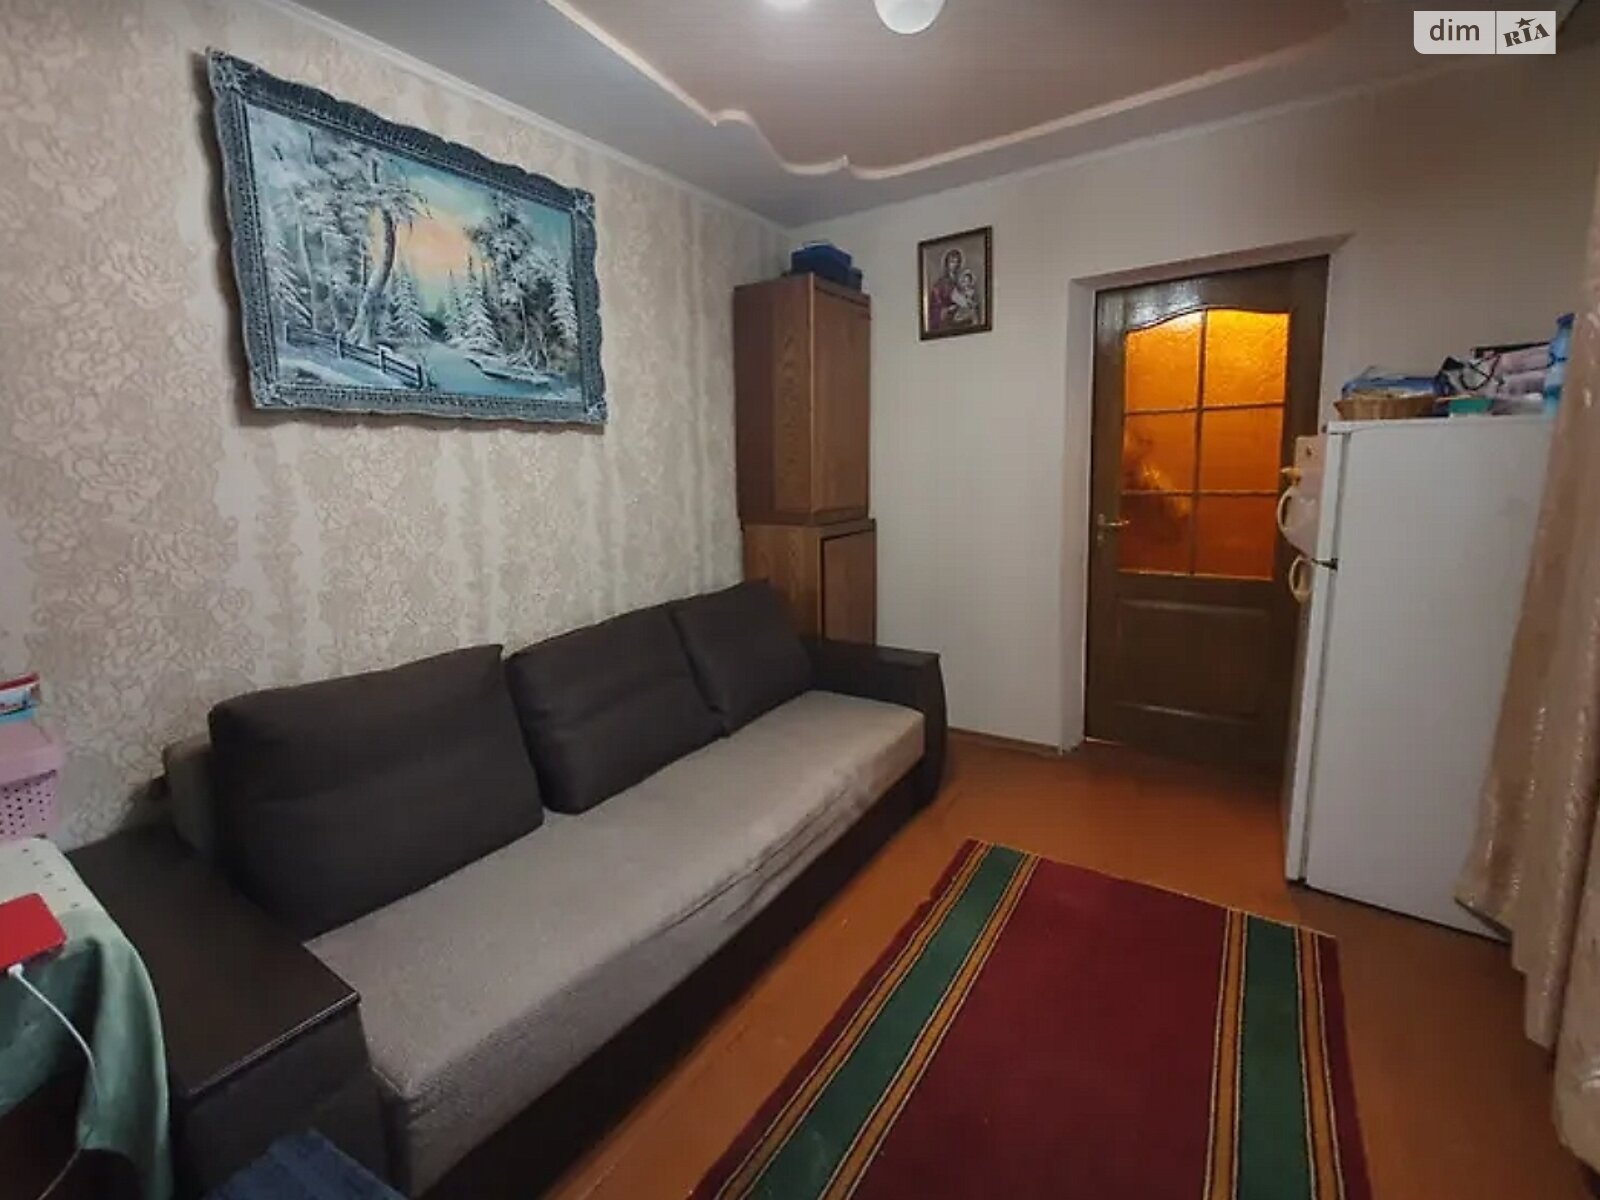 Продажа части дома в Хмельницком, улица Бажана, район Загот Зерно, 2 комнаты фото 1